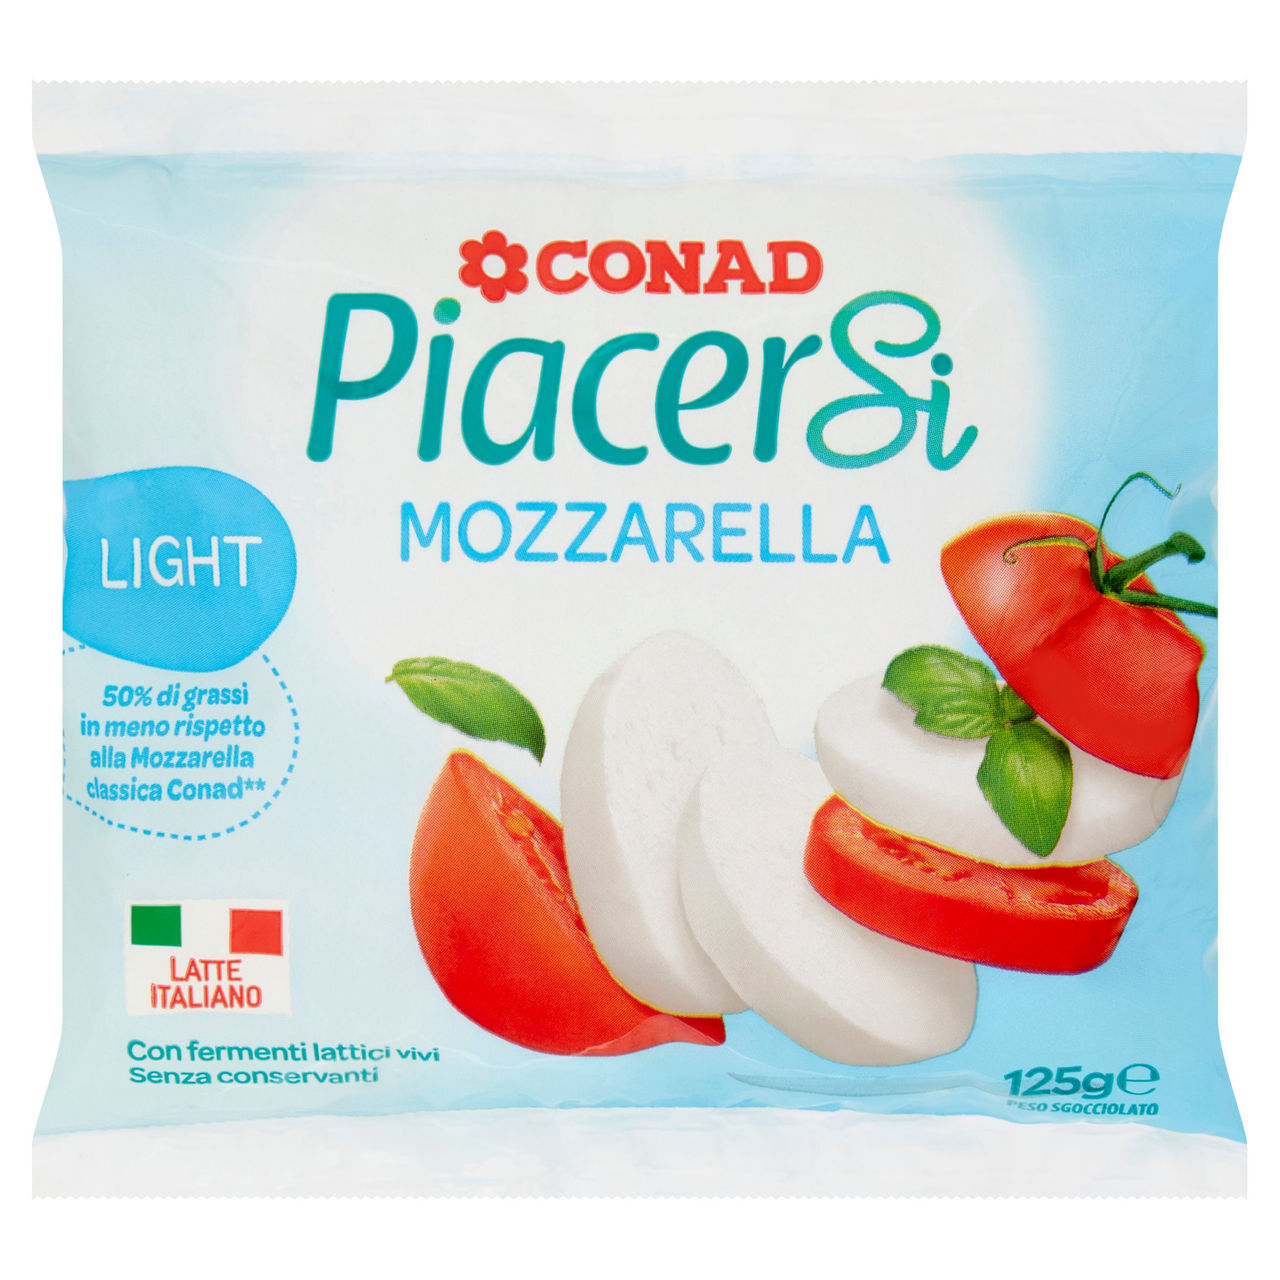 Mozzarella Light 125g Piacersi Conad online